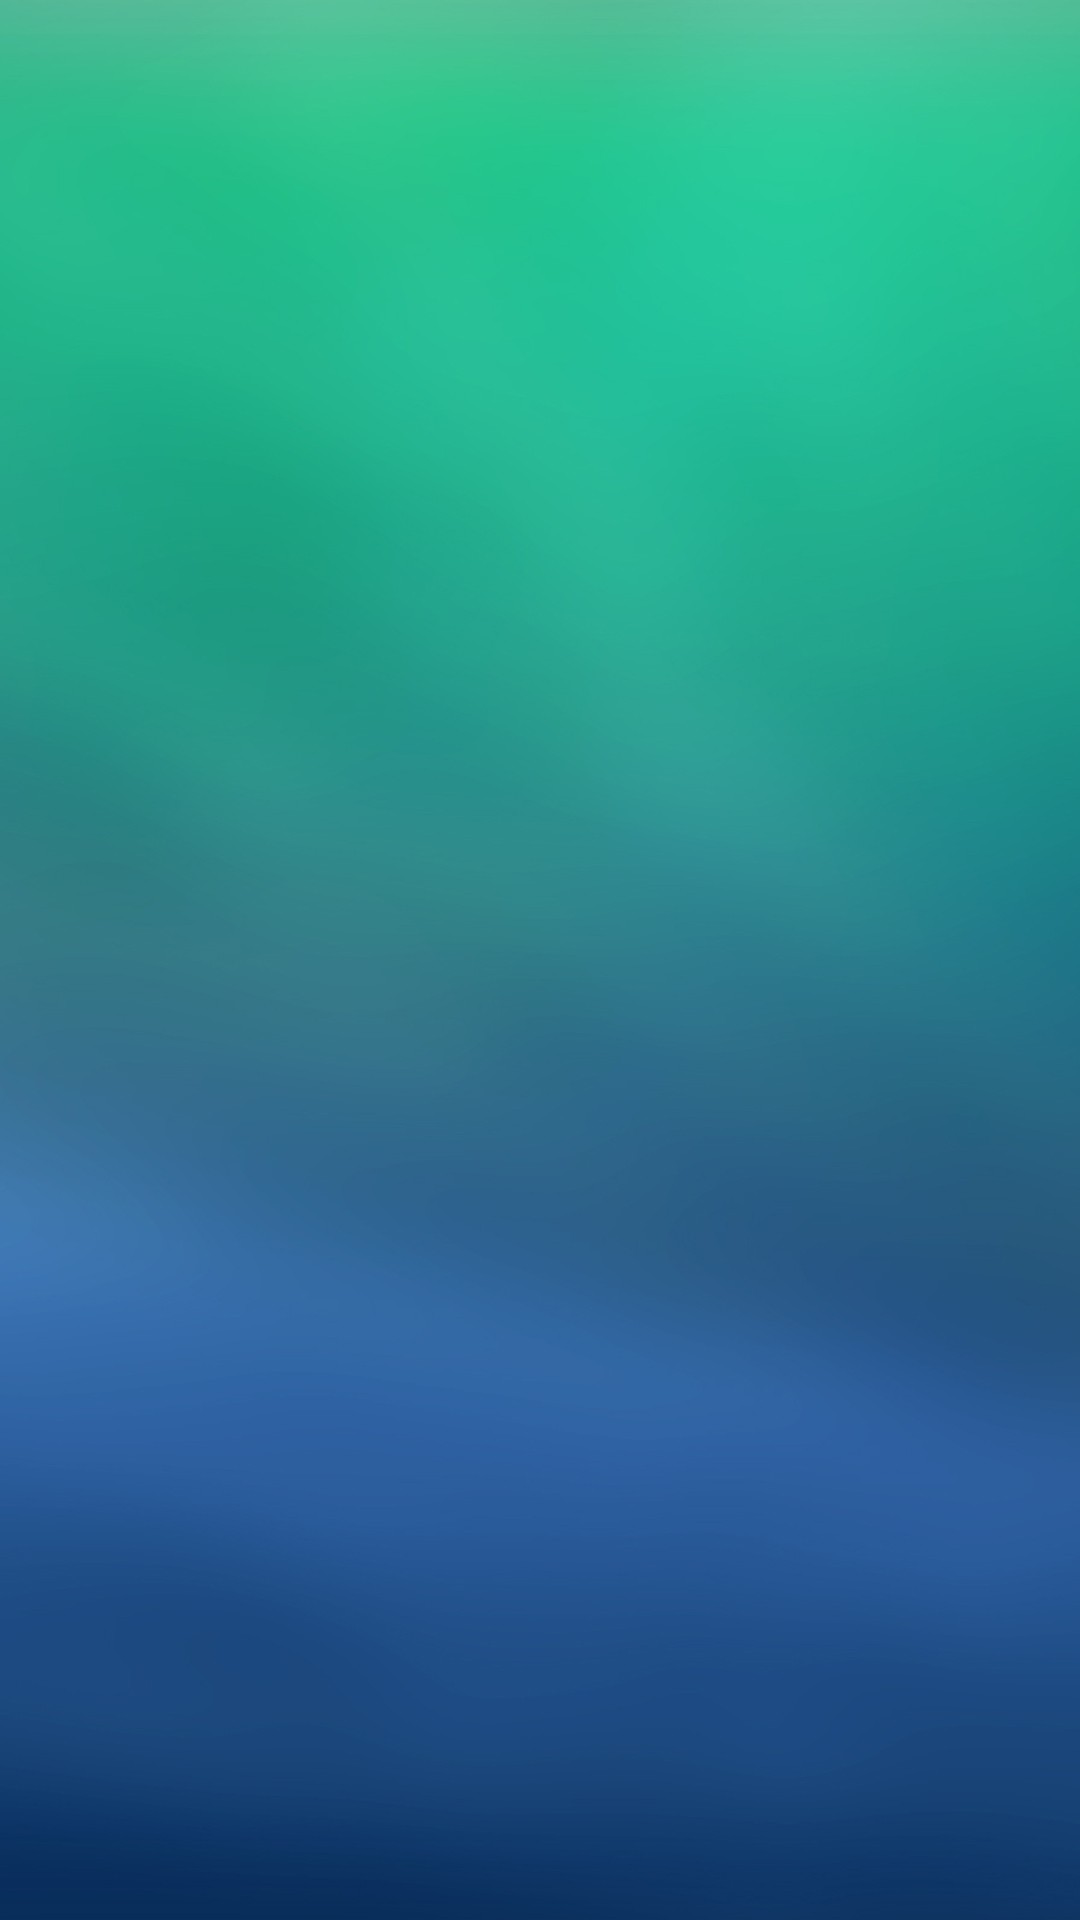 General 1080x1920 OS X gradient texture minimalism DeviantArt